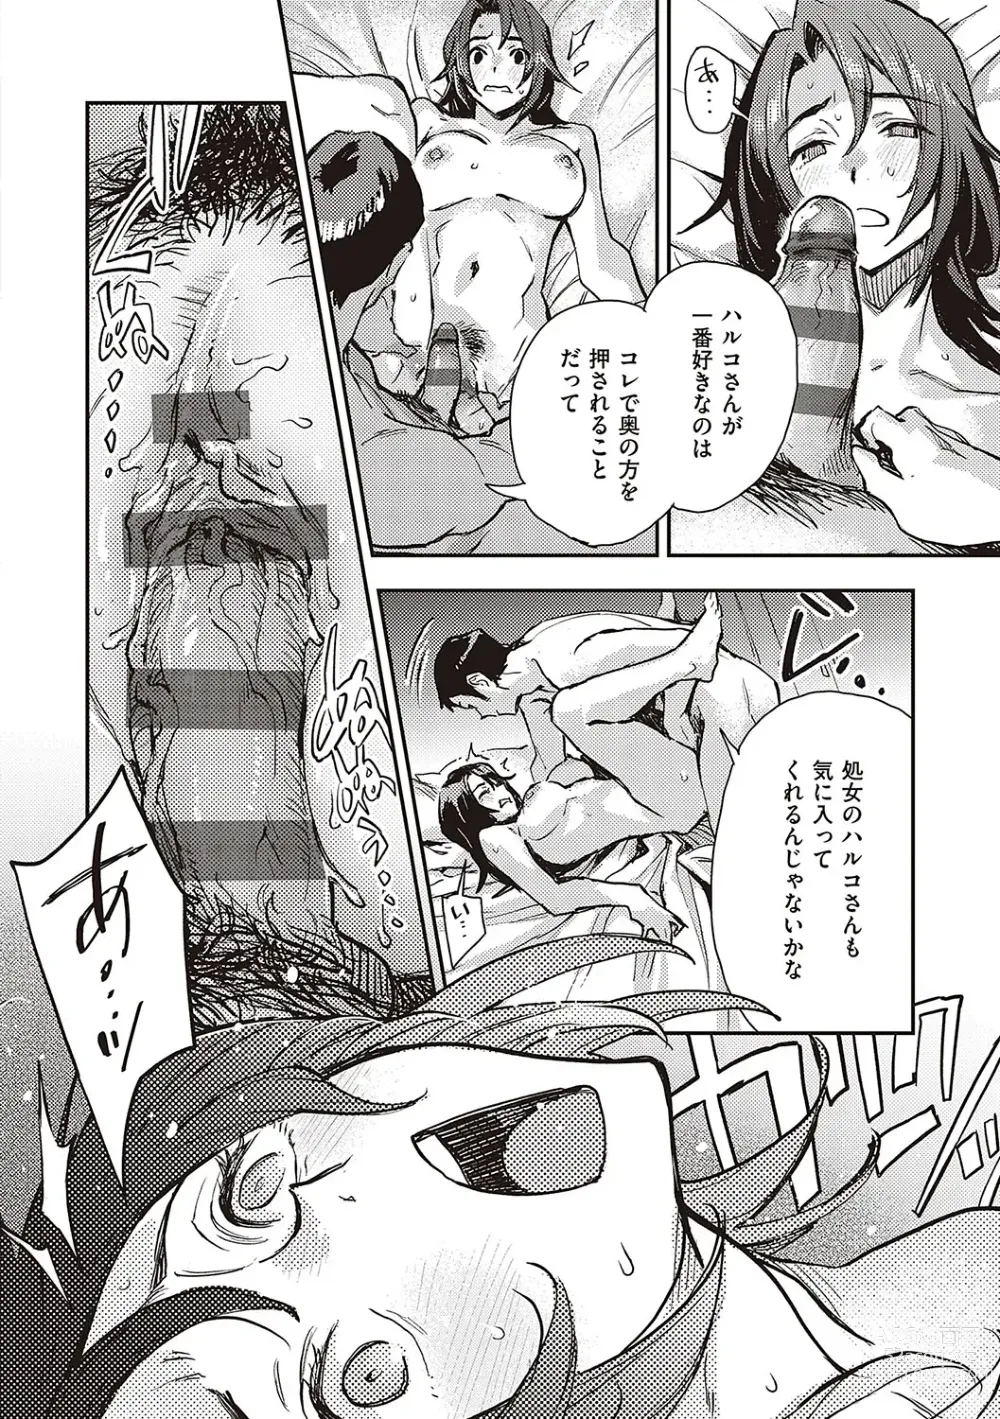 Page 163 of manga Ashu to Resonance - The resonance with subspecies